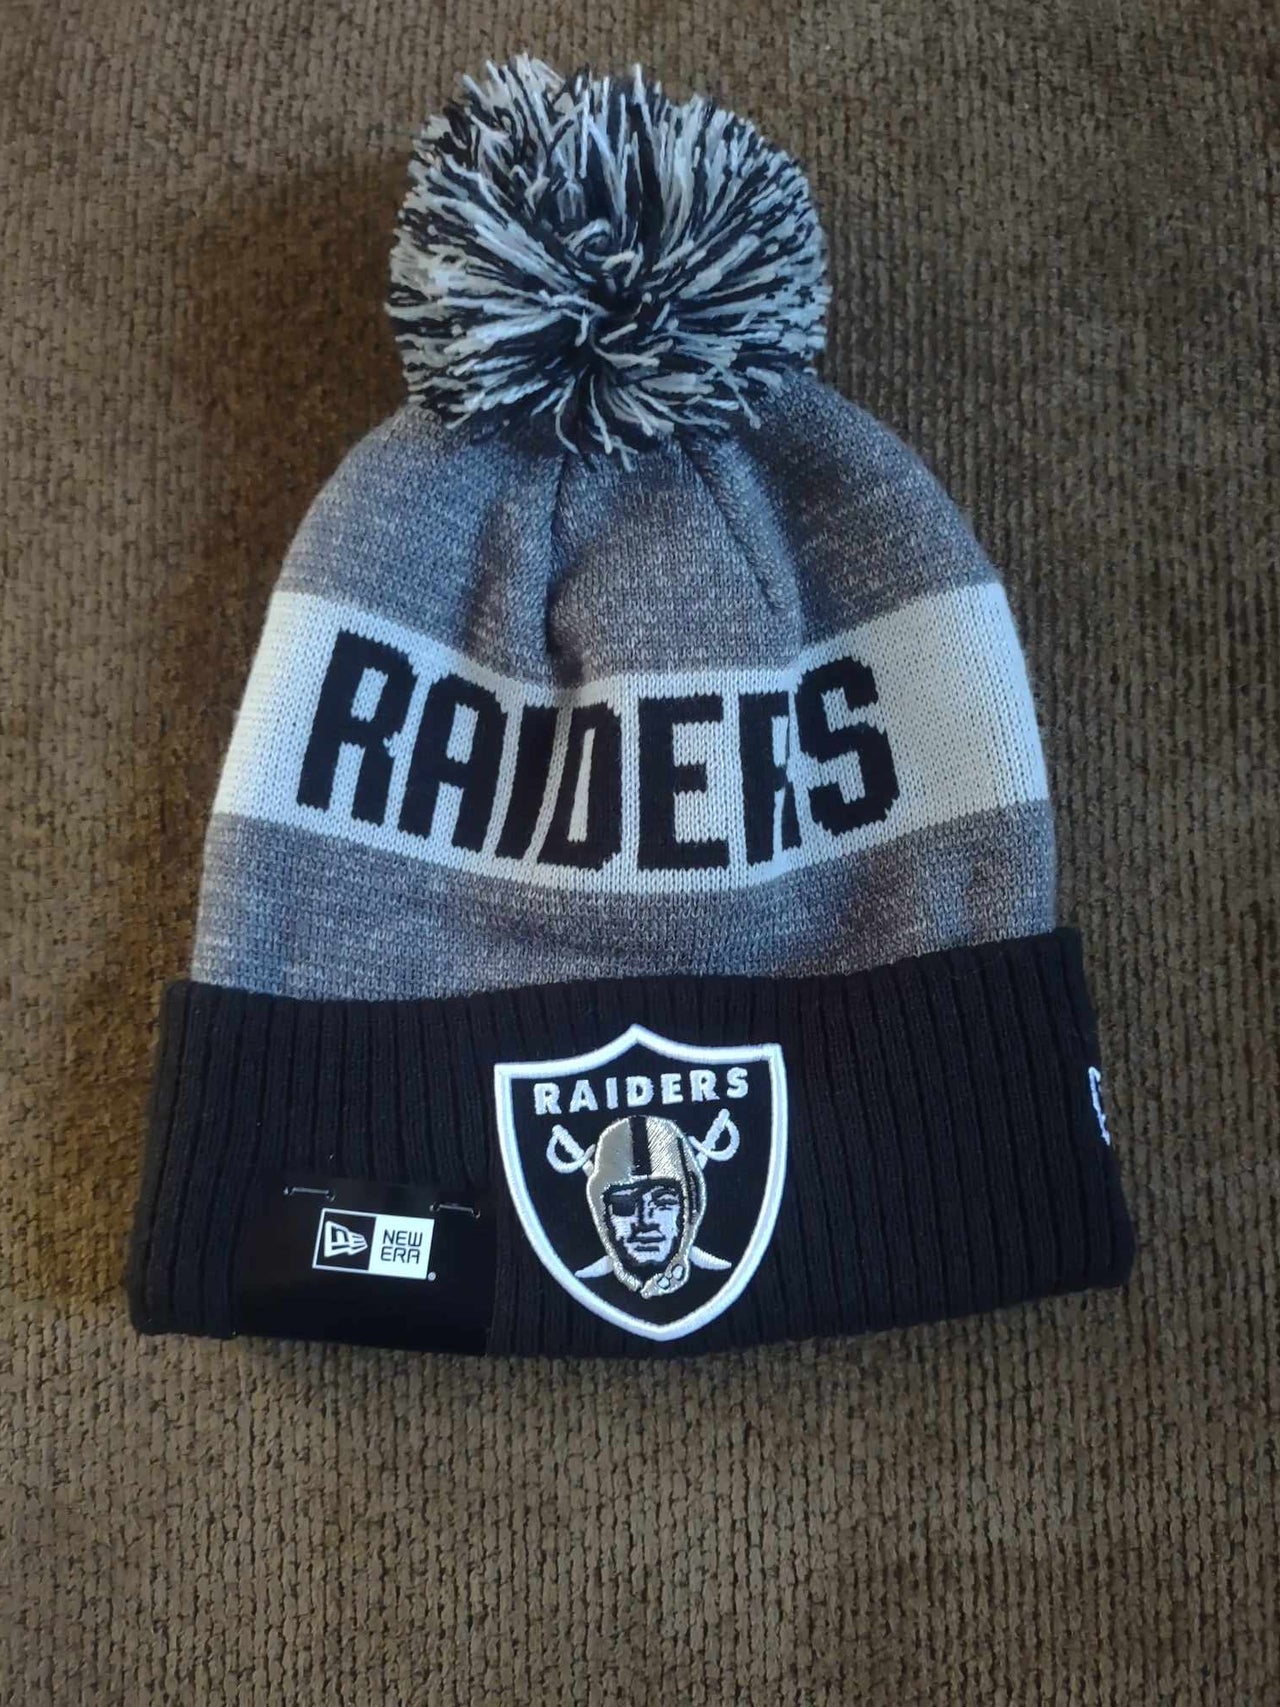 Las Vegas Raiders Charcoal Knit New Era Winter Pom Hat